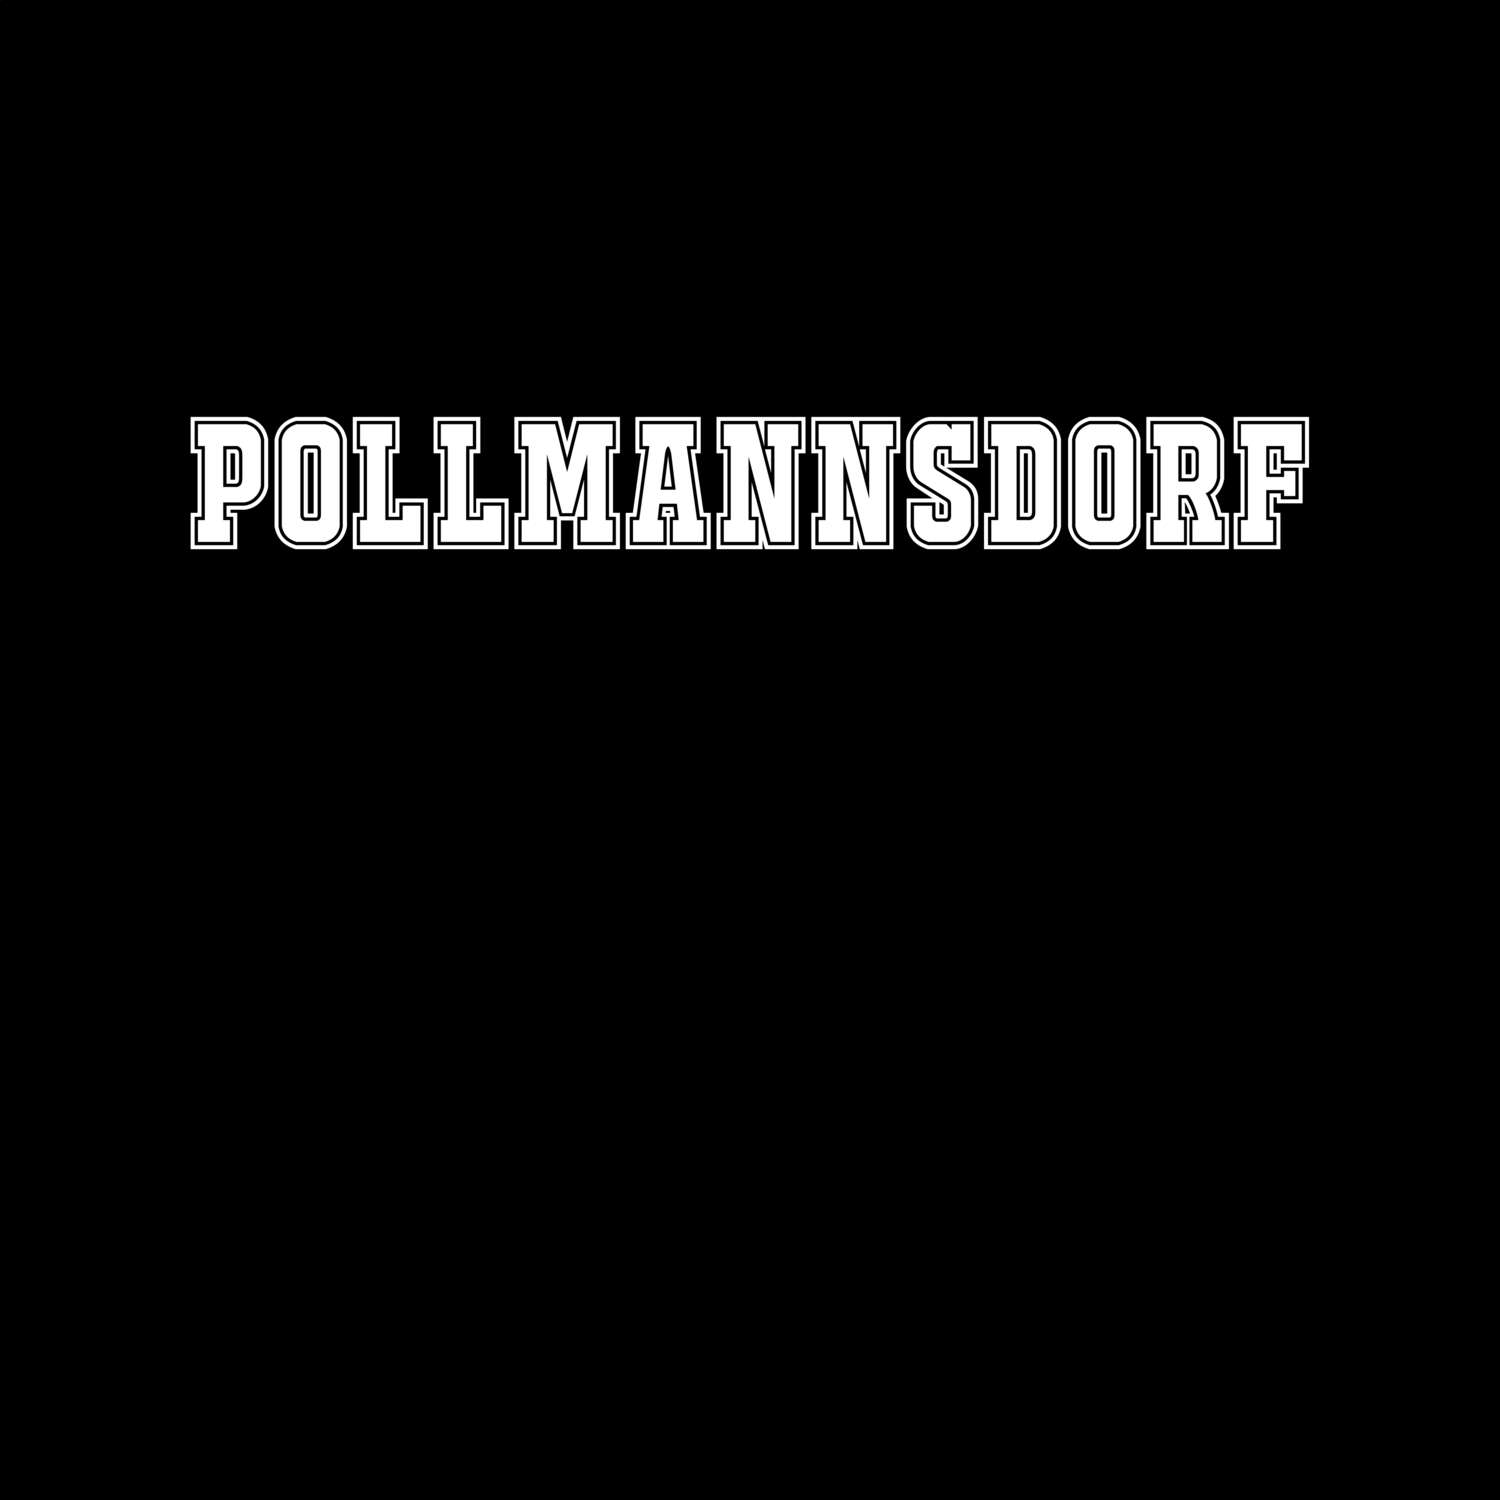 Pollmannsdorf T-Shirt »Classic«